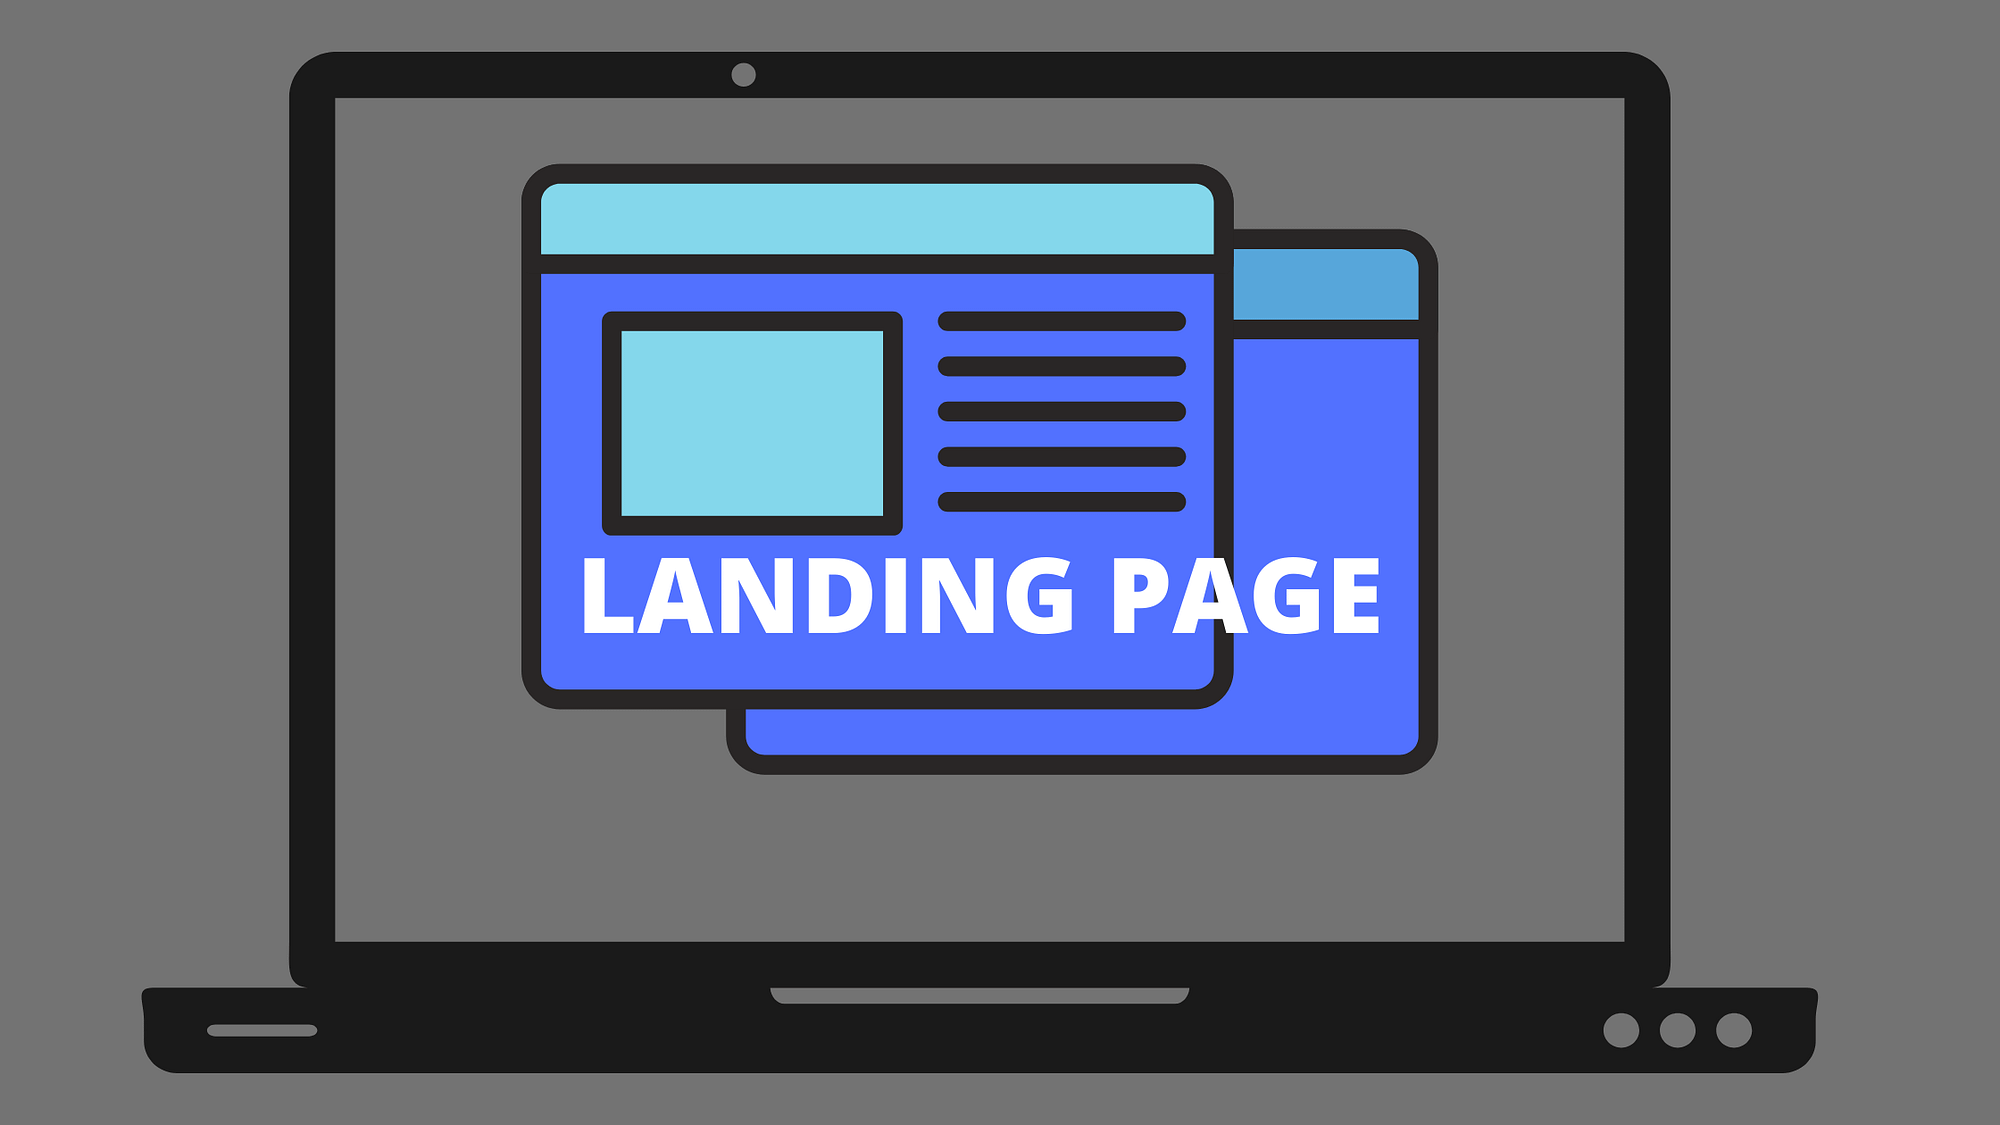 Should I Optimize for Landing Page Views?